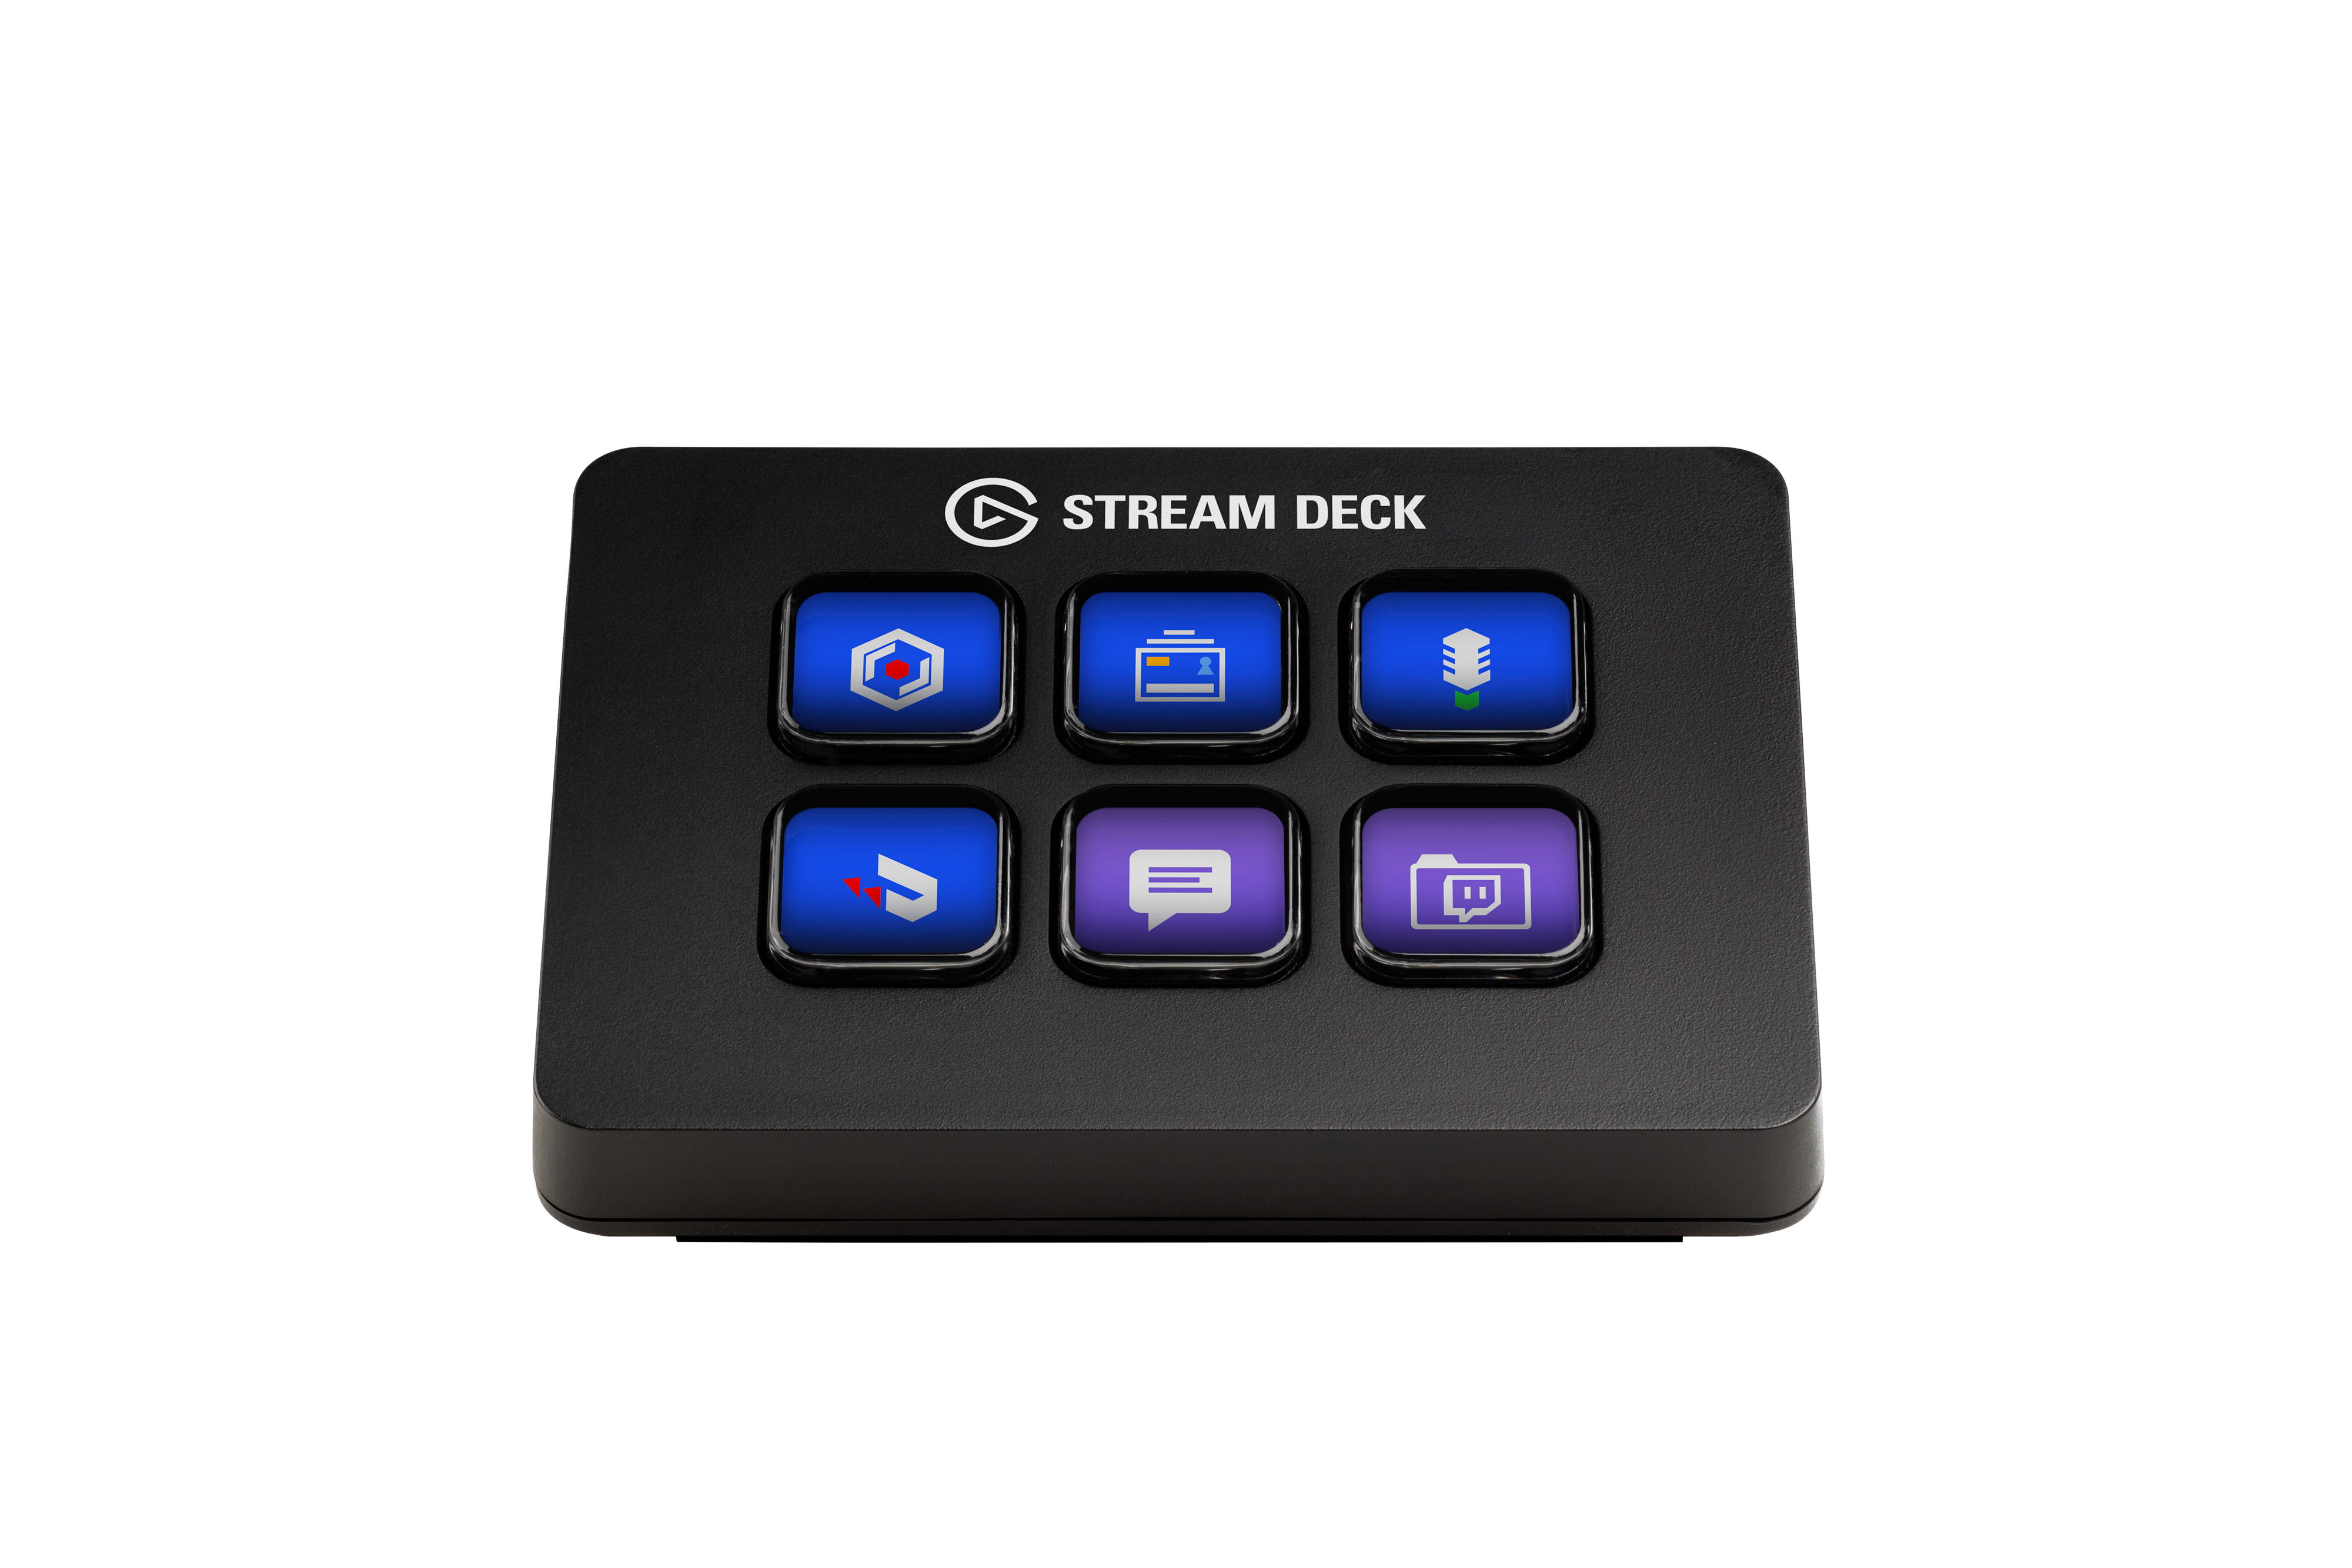 Elgato Stream Deck Mini 6 LCD Keys